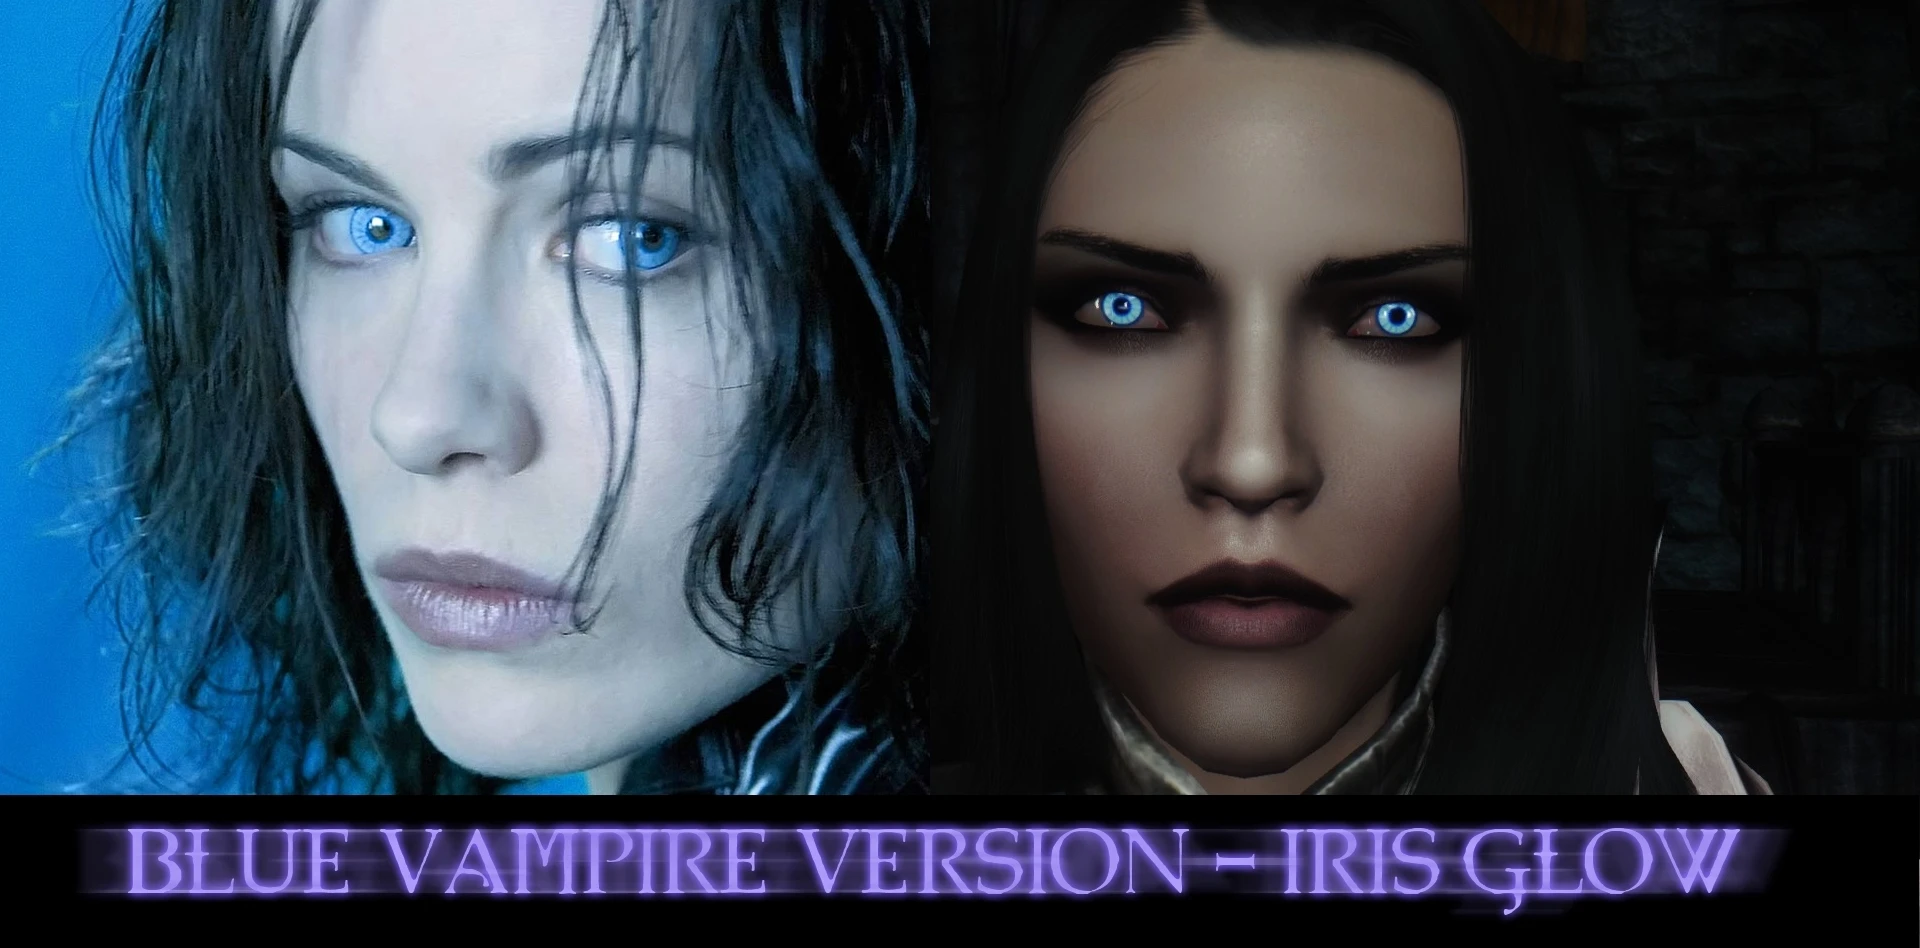 Blue Vampire Version - Iris Glow. 